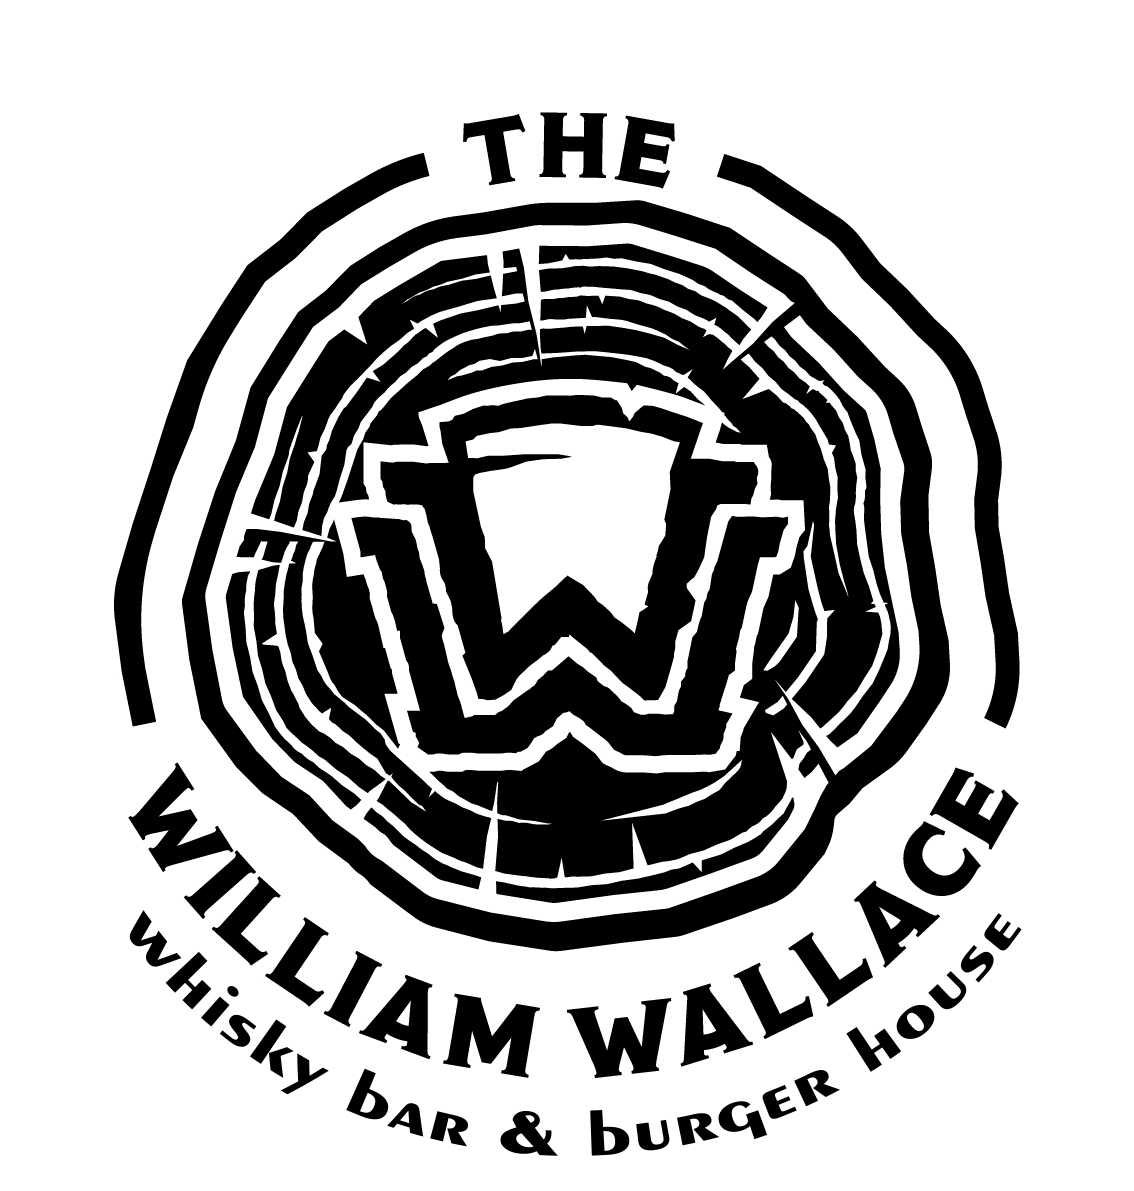 The William Wallce - whisky bar & burger house